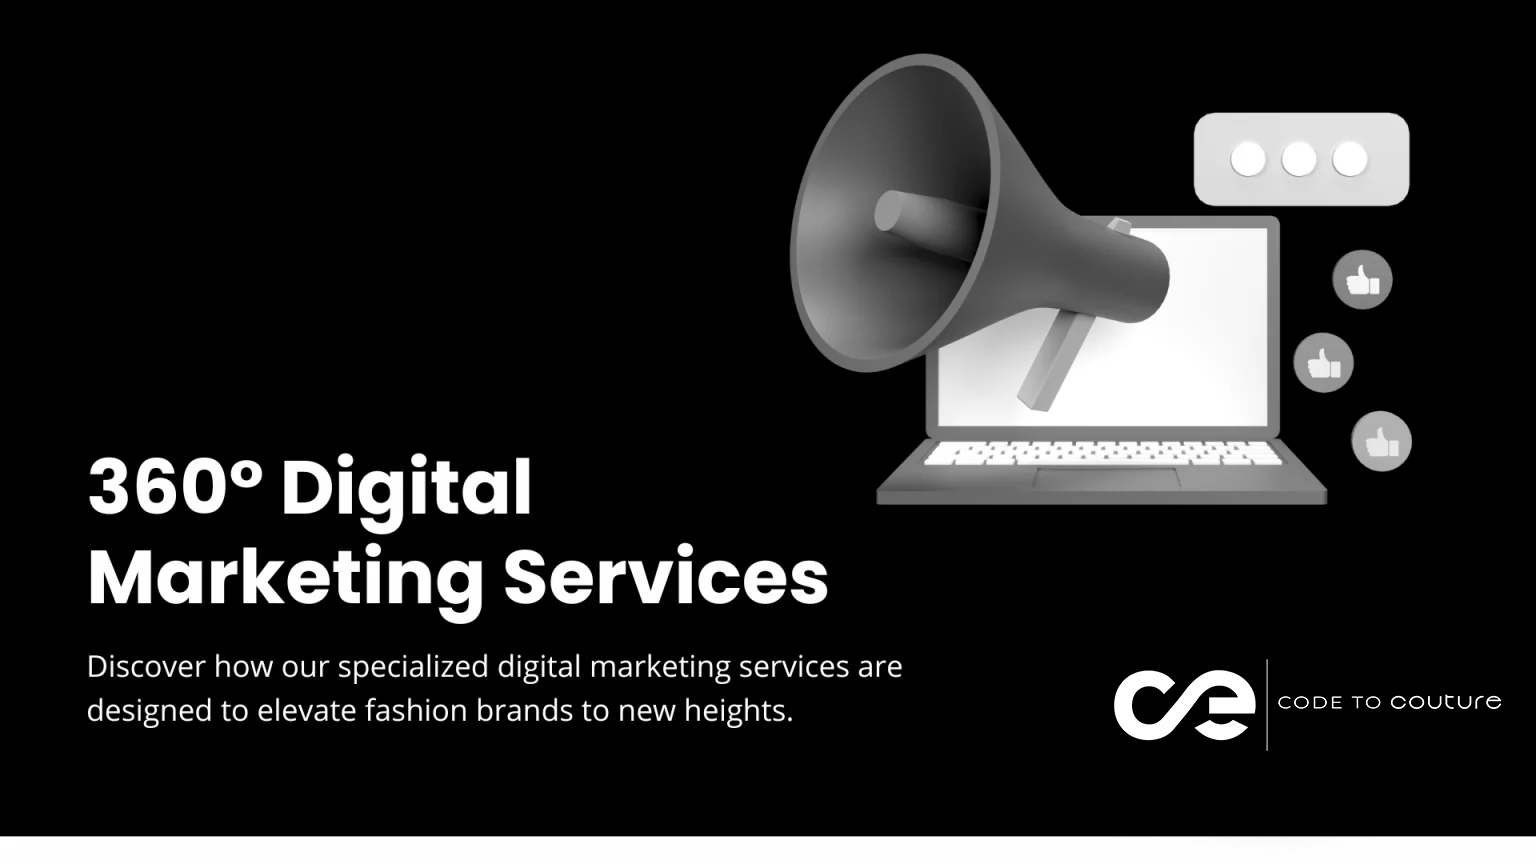 360 Digital Marketing Services